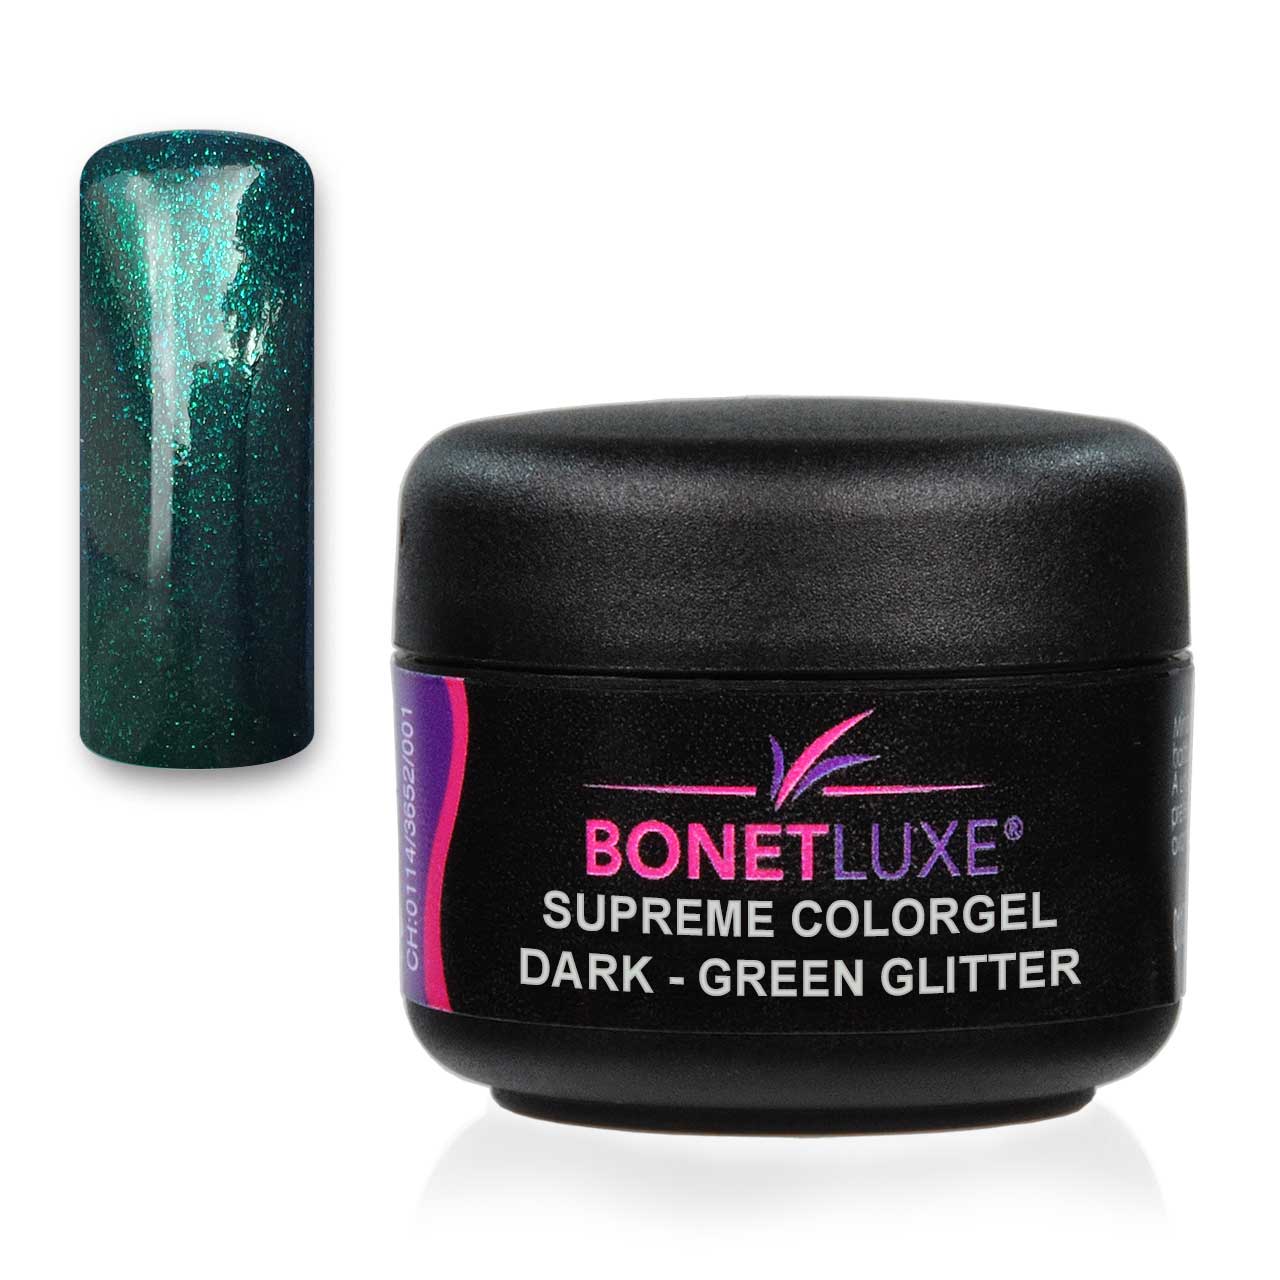 Bonetluxe Supreme Colorgel Dark-Green Glitter